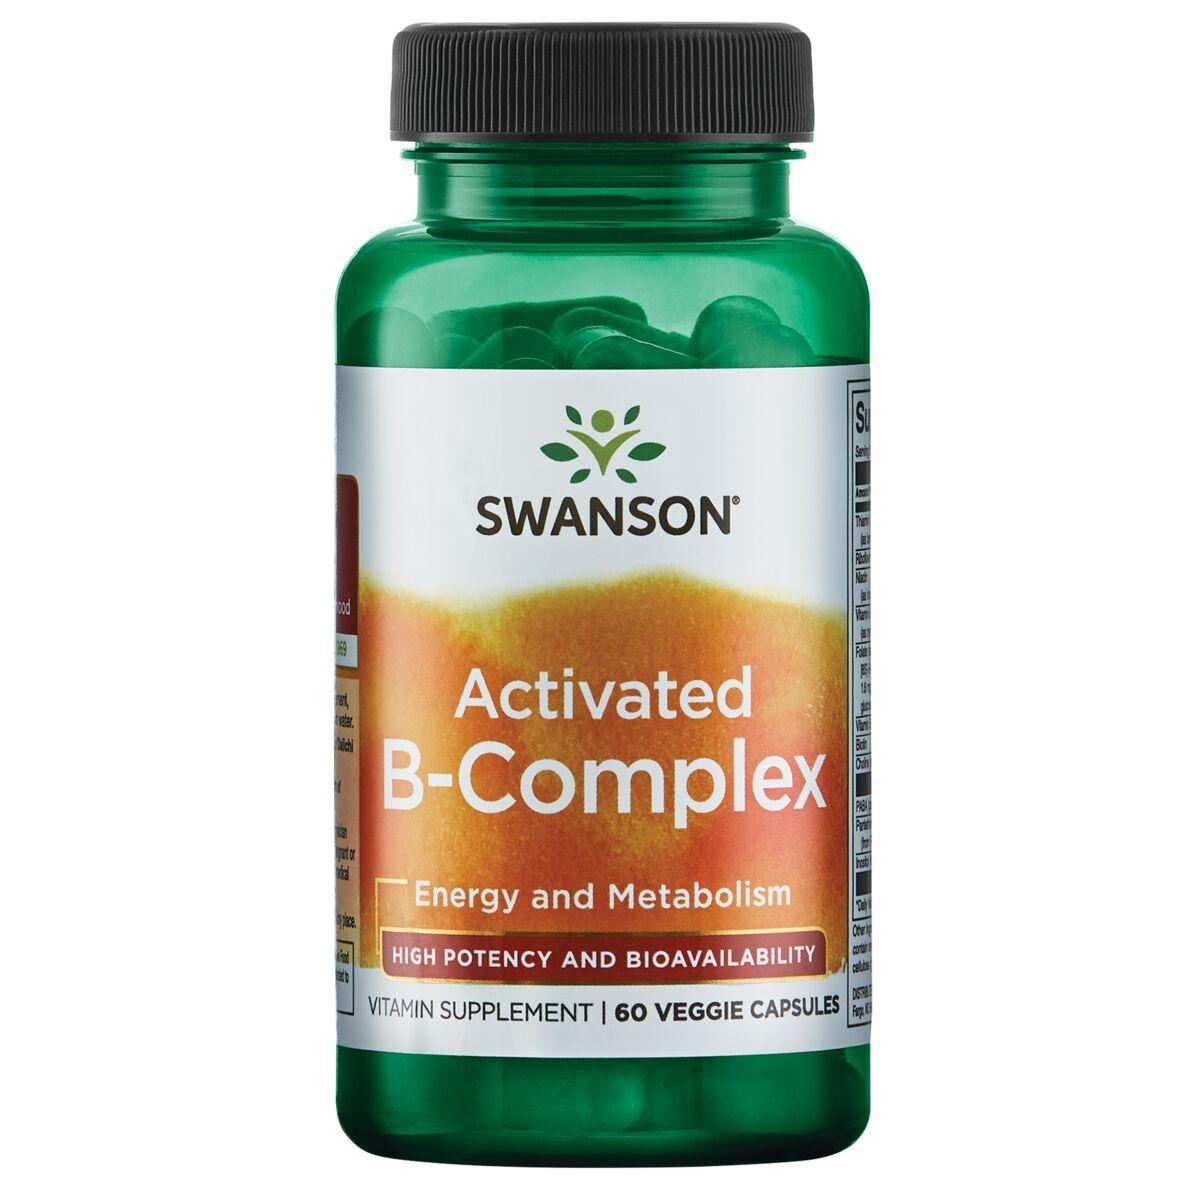 Swanson Ultra Activated B-Complex - High Potency and Bioavailability Vitamin | 60 Veg Caps | Vitamin C